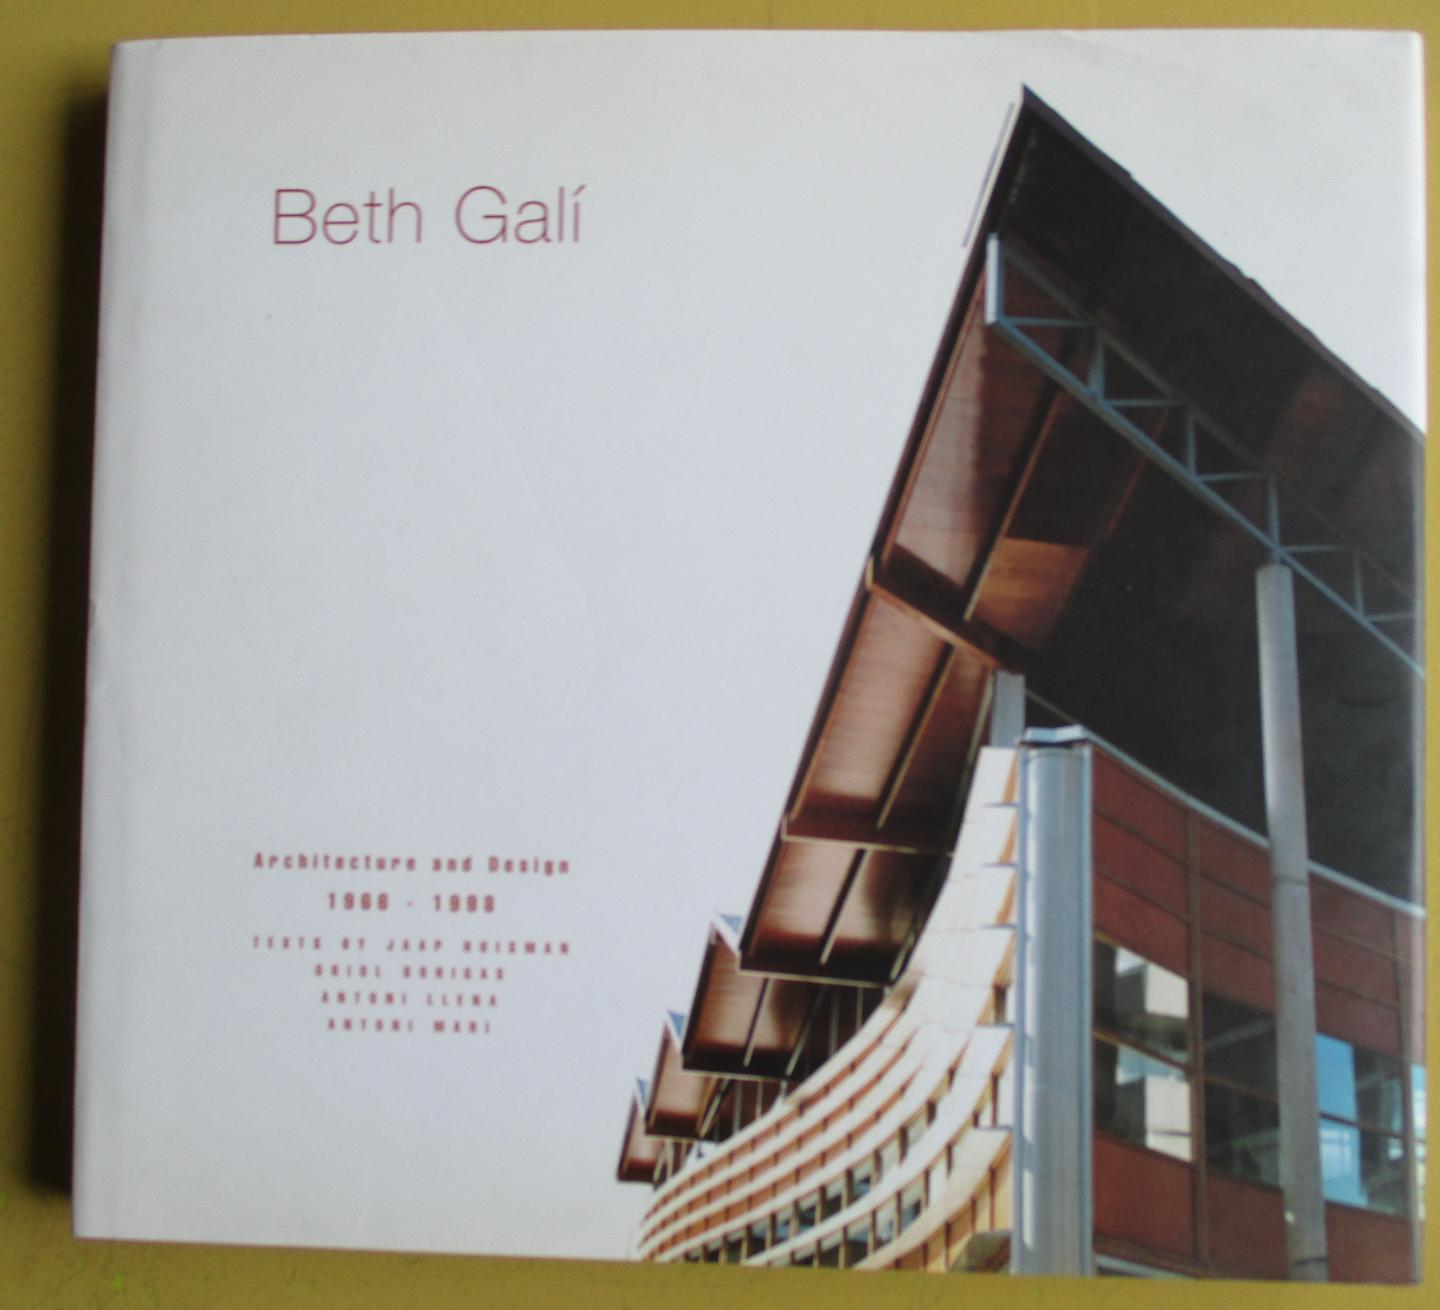 Huisman, Jaap / Oriol Bohigas / Antoni LLena / Antoni Mari. - BETH GALÍ    Architecture and Design  1966 - 1998